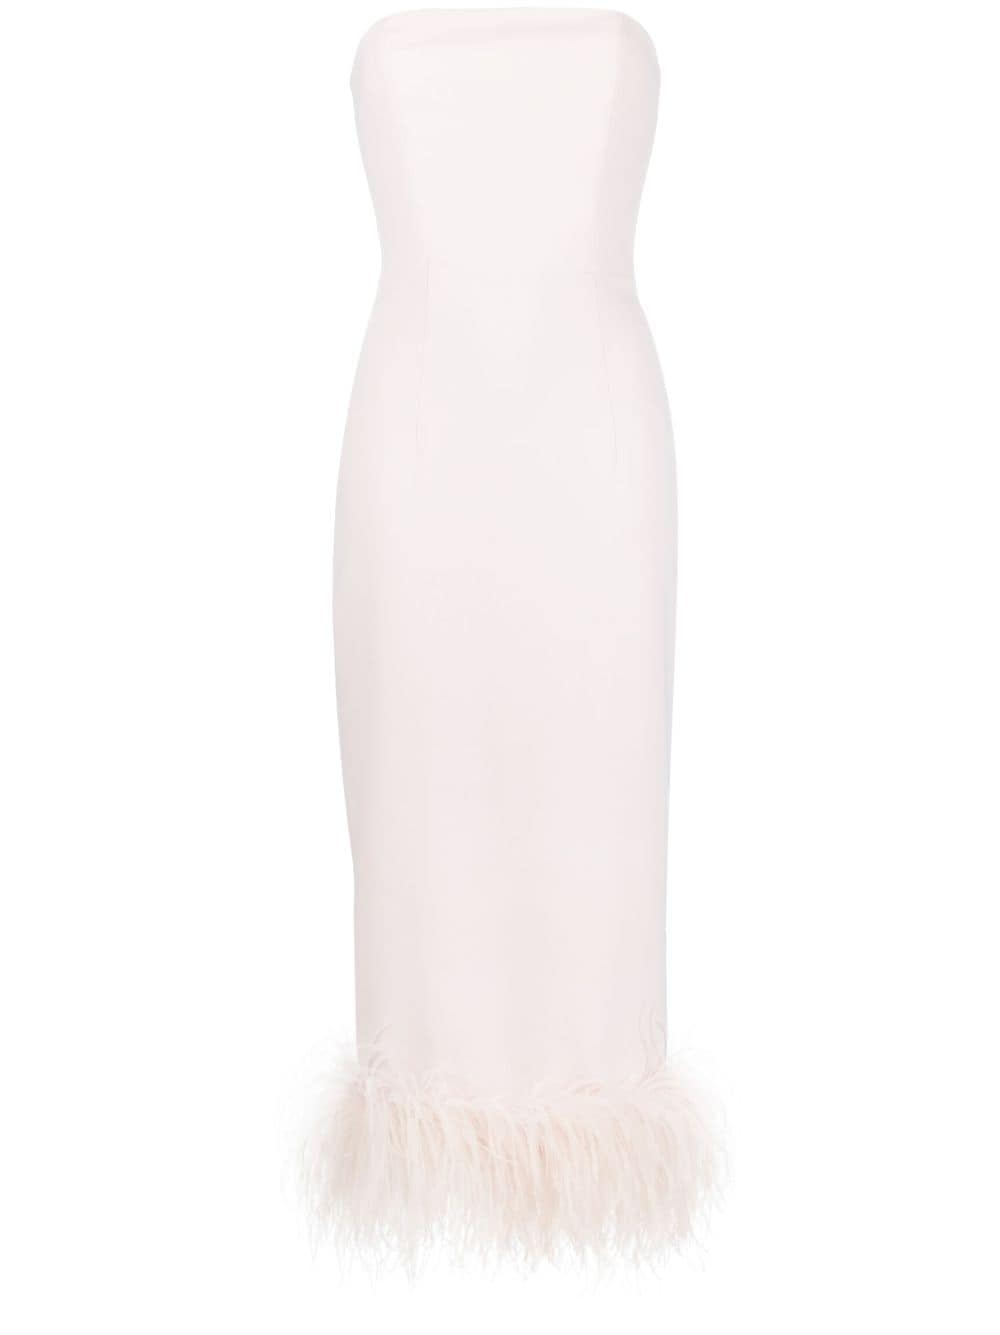 Minelli feather-trim strapless dress